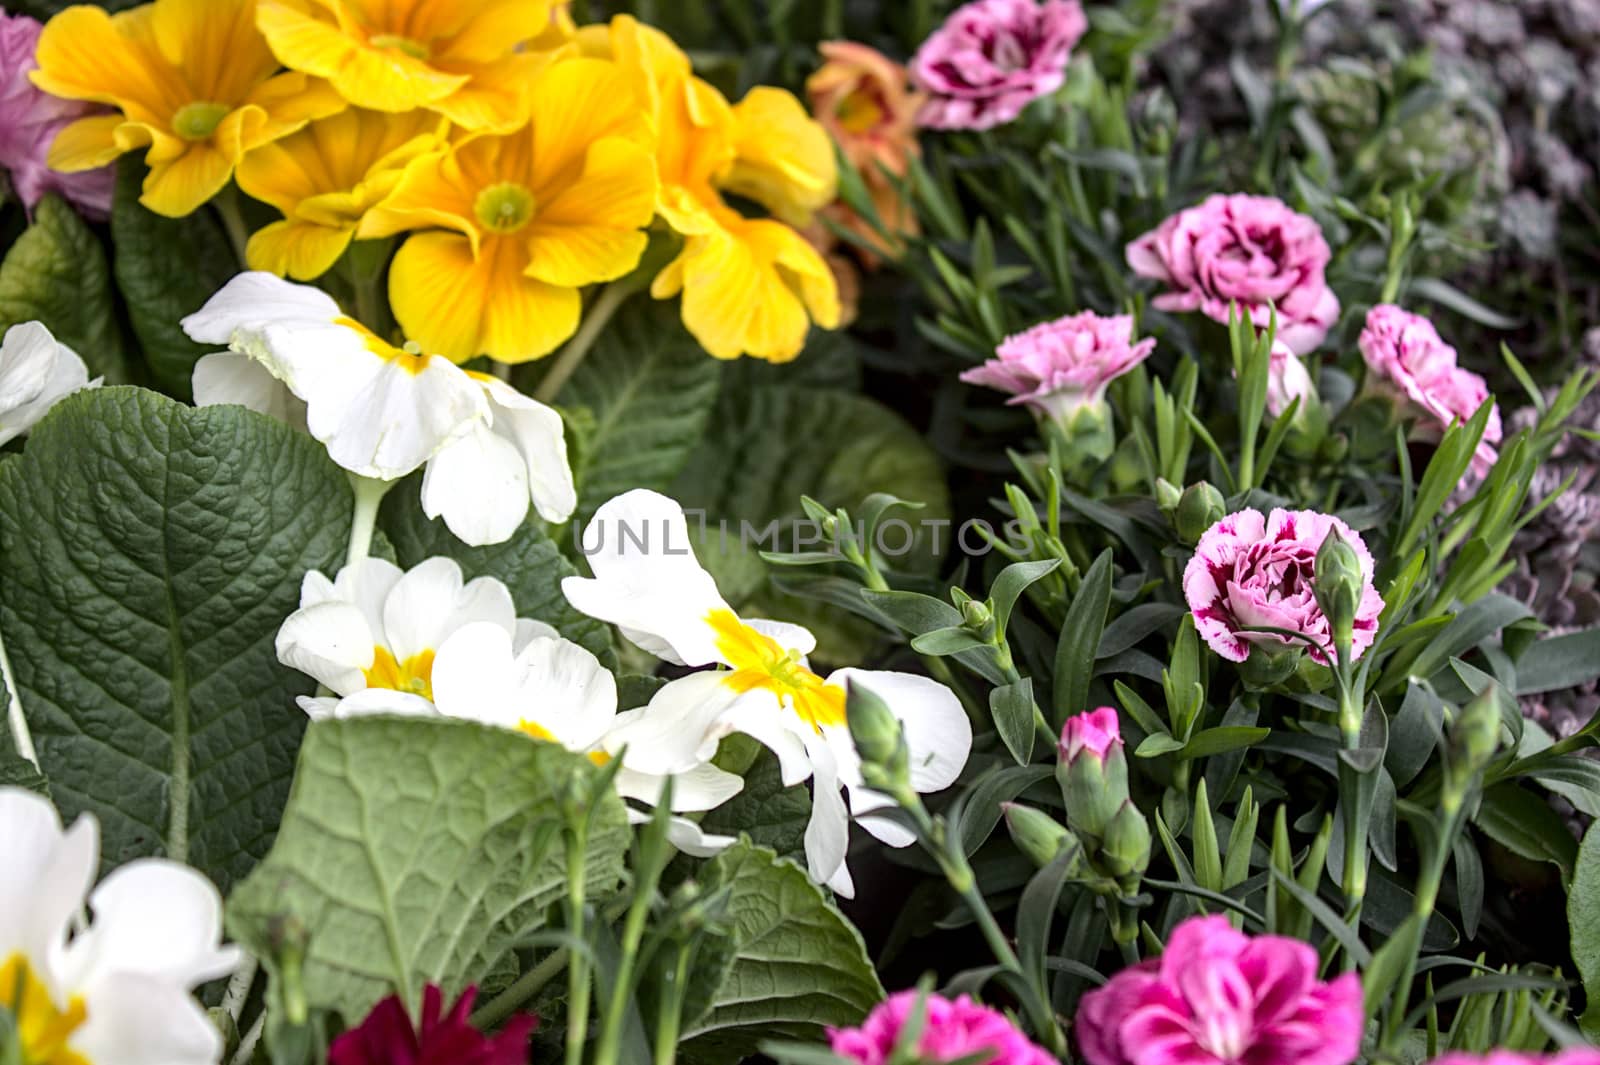 colourful primroses in the garden by martina_unbehauen